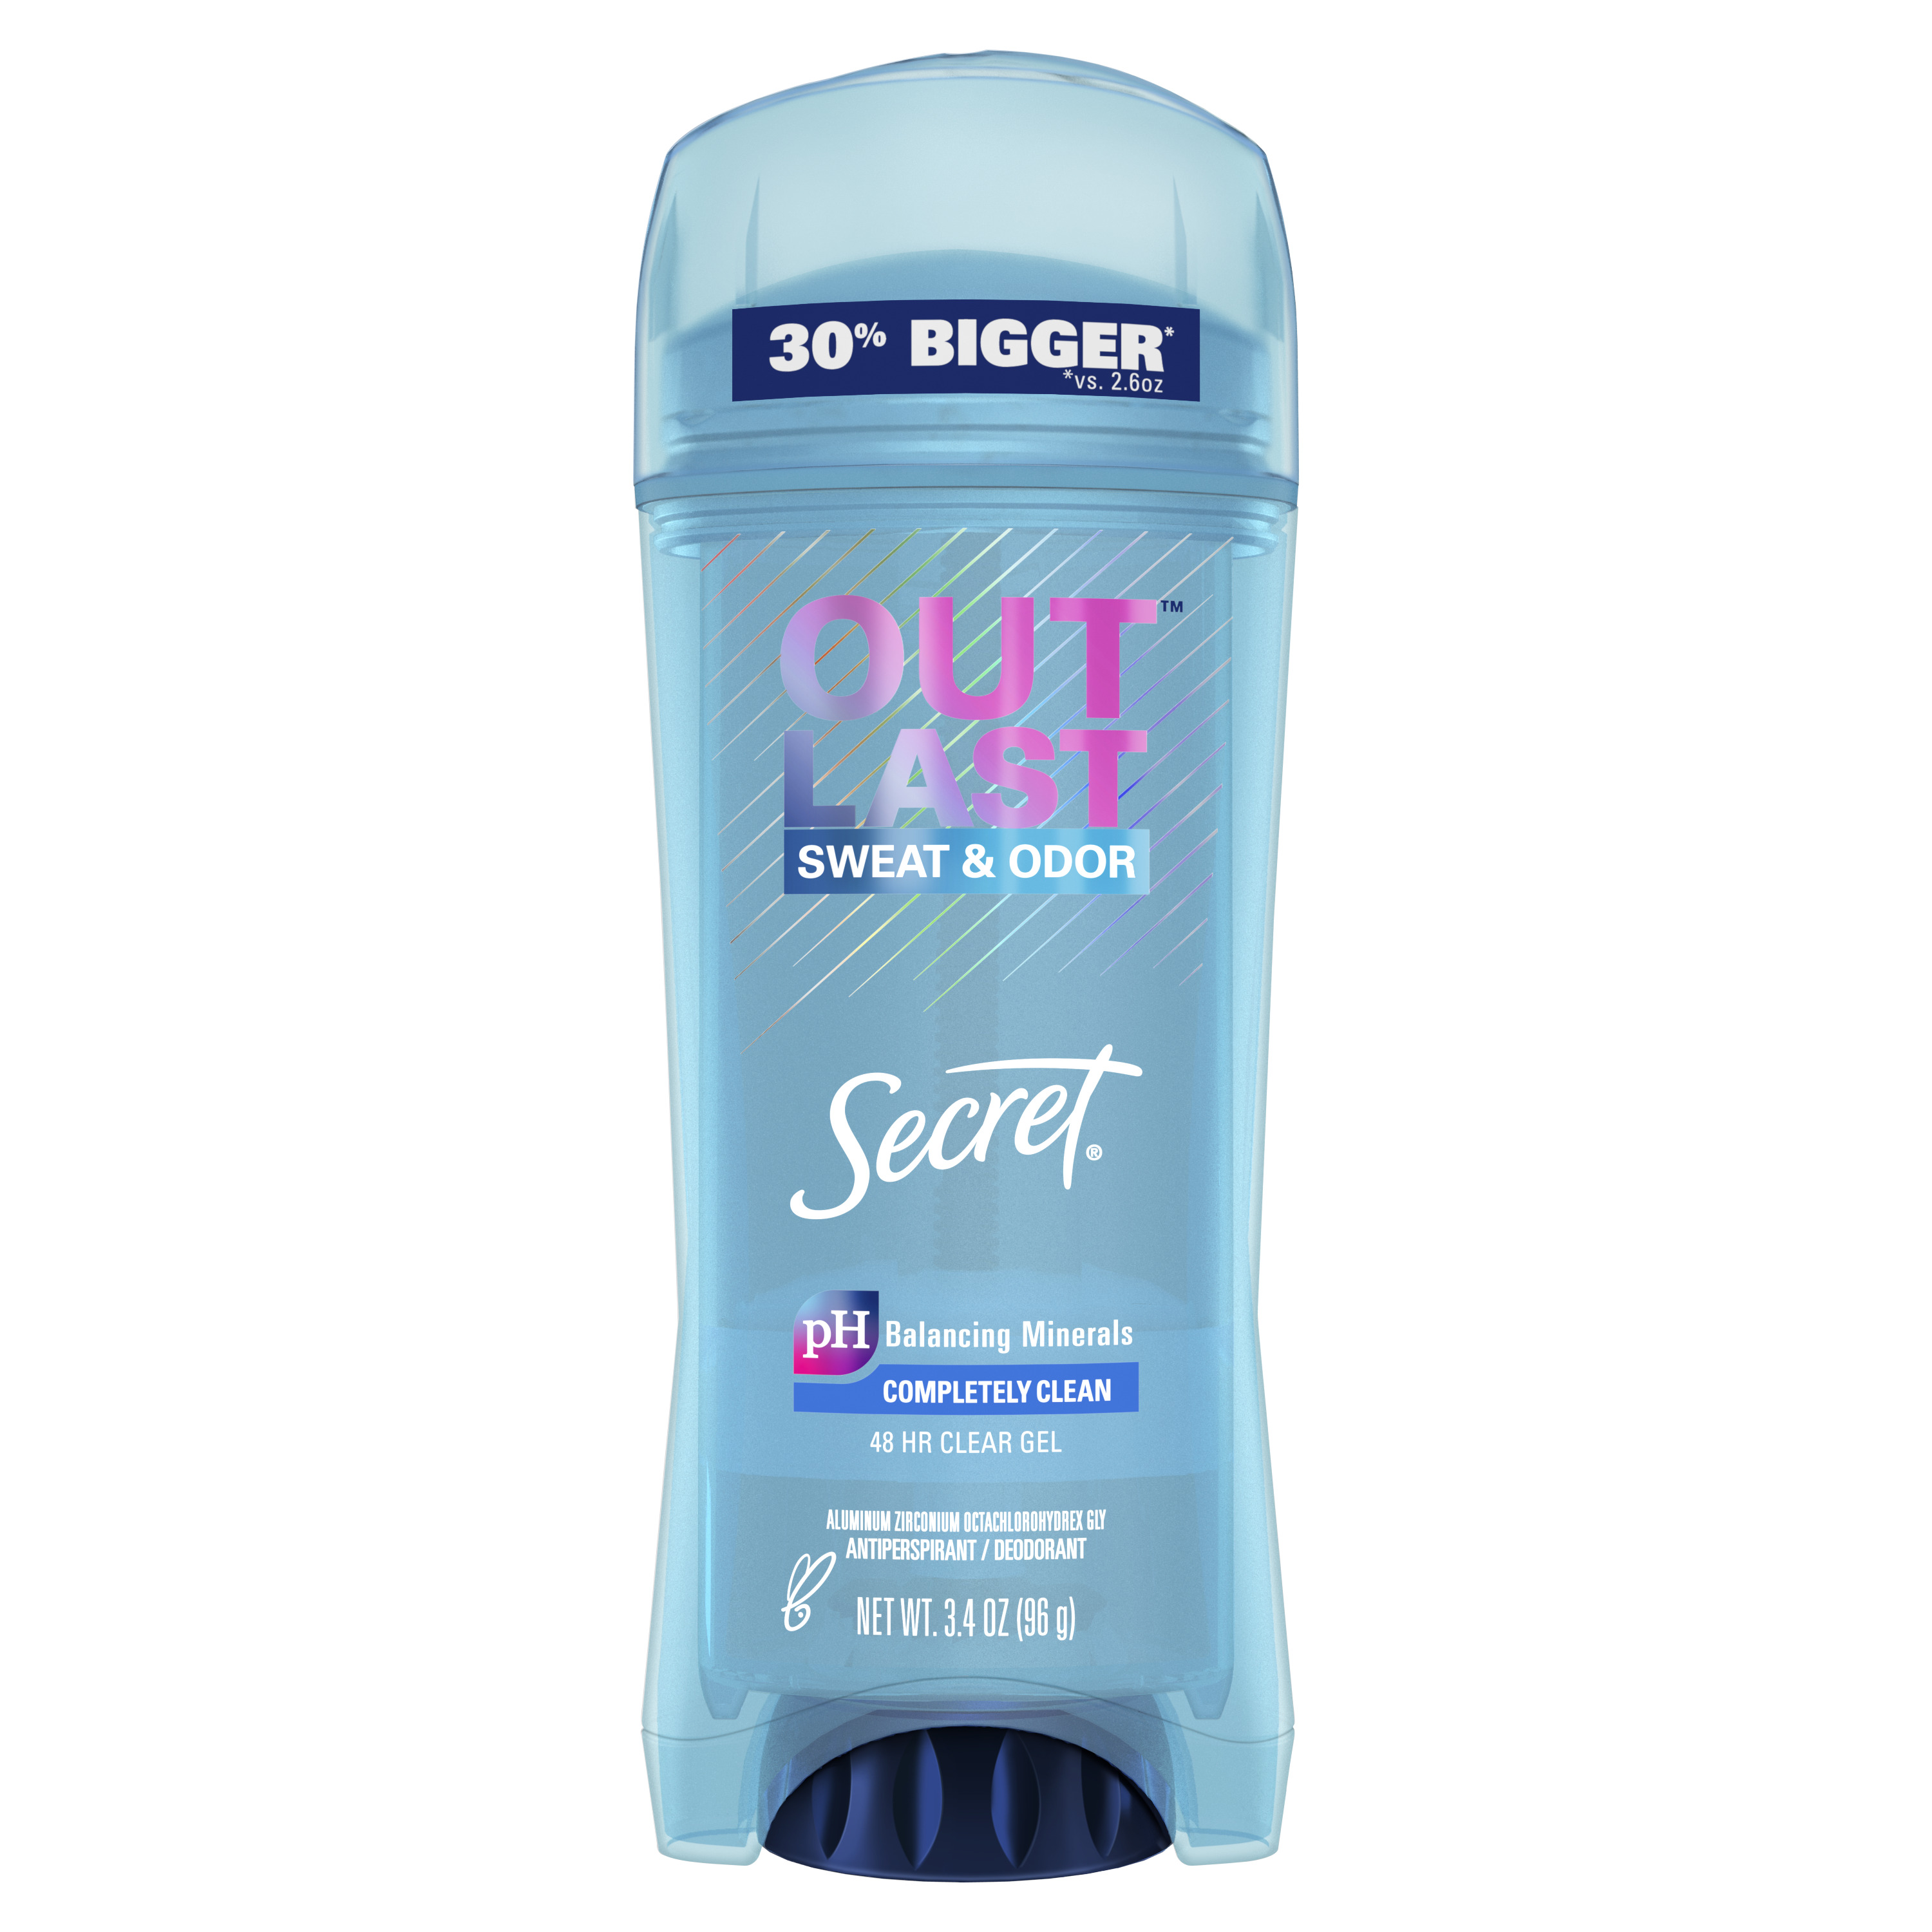 Secret Outlast Clear Gel Antiperspirant Deodorant for Women Completely Clean, 3.4 oz - image 2 of 10